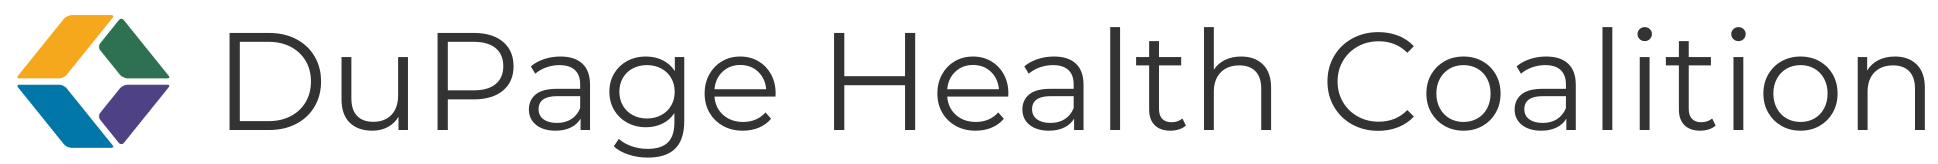 DuPage Health Coalition Logo Poziome